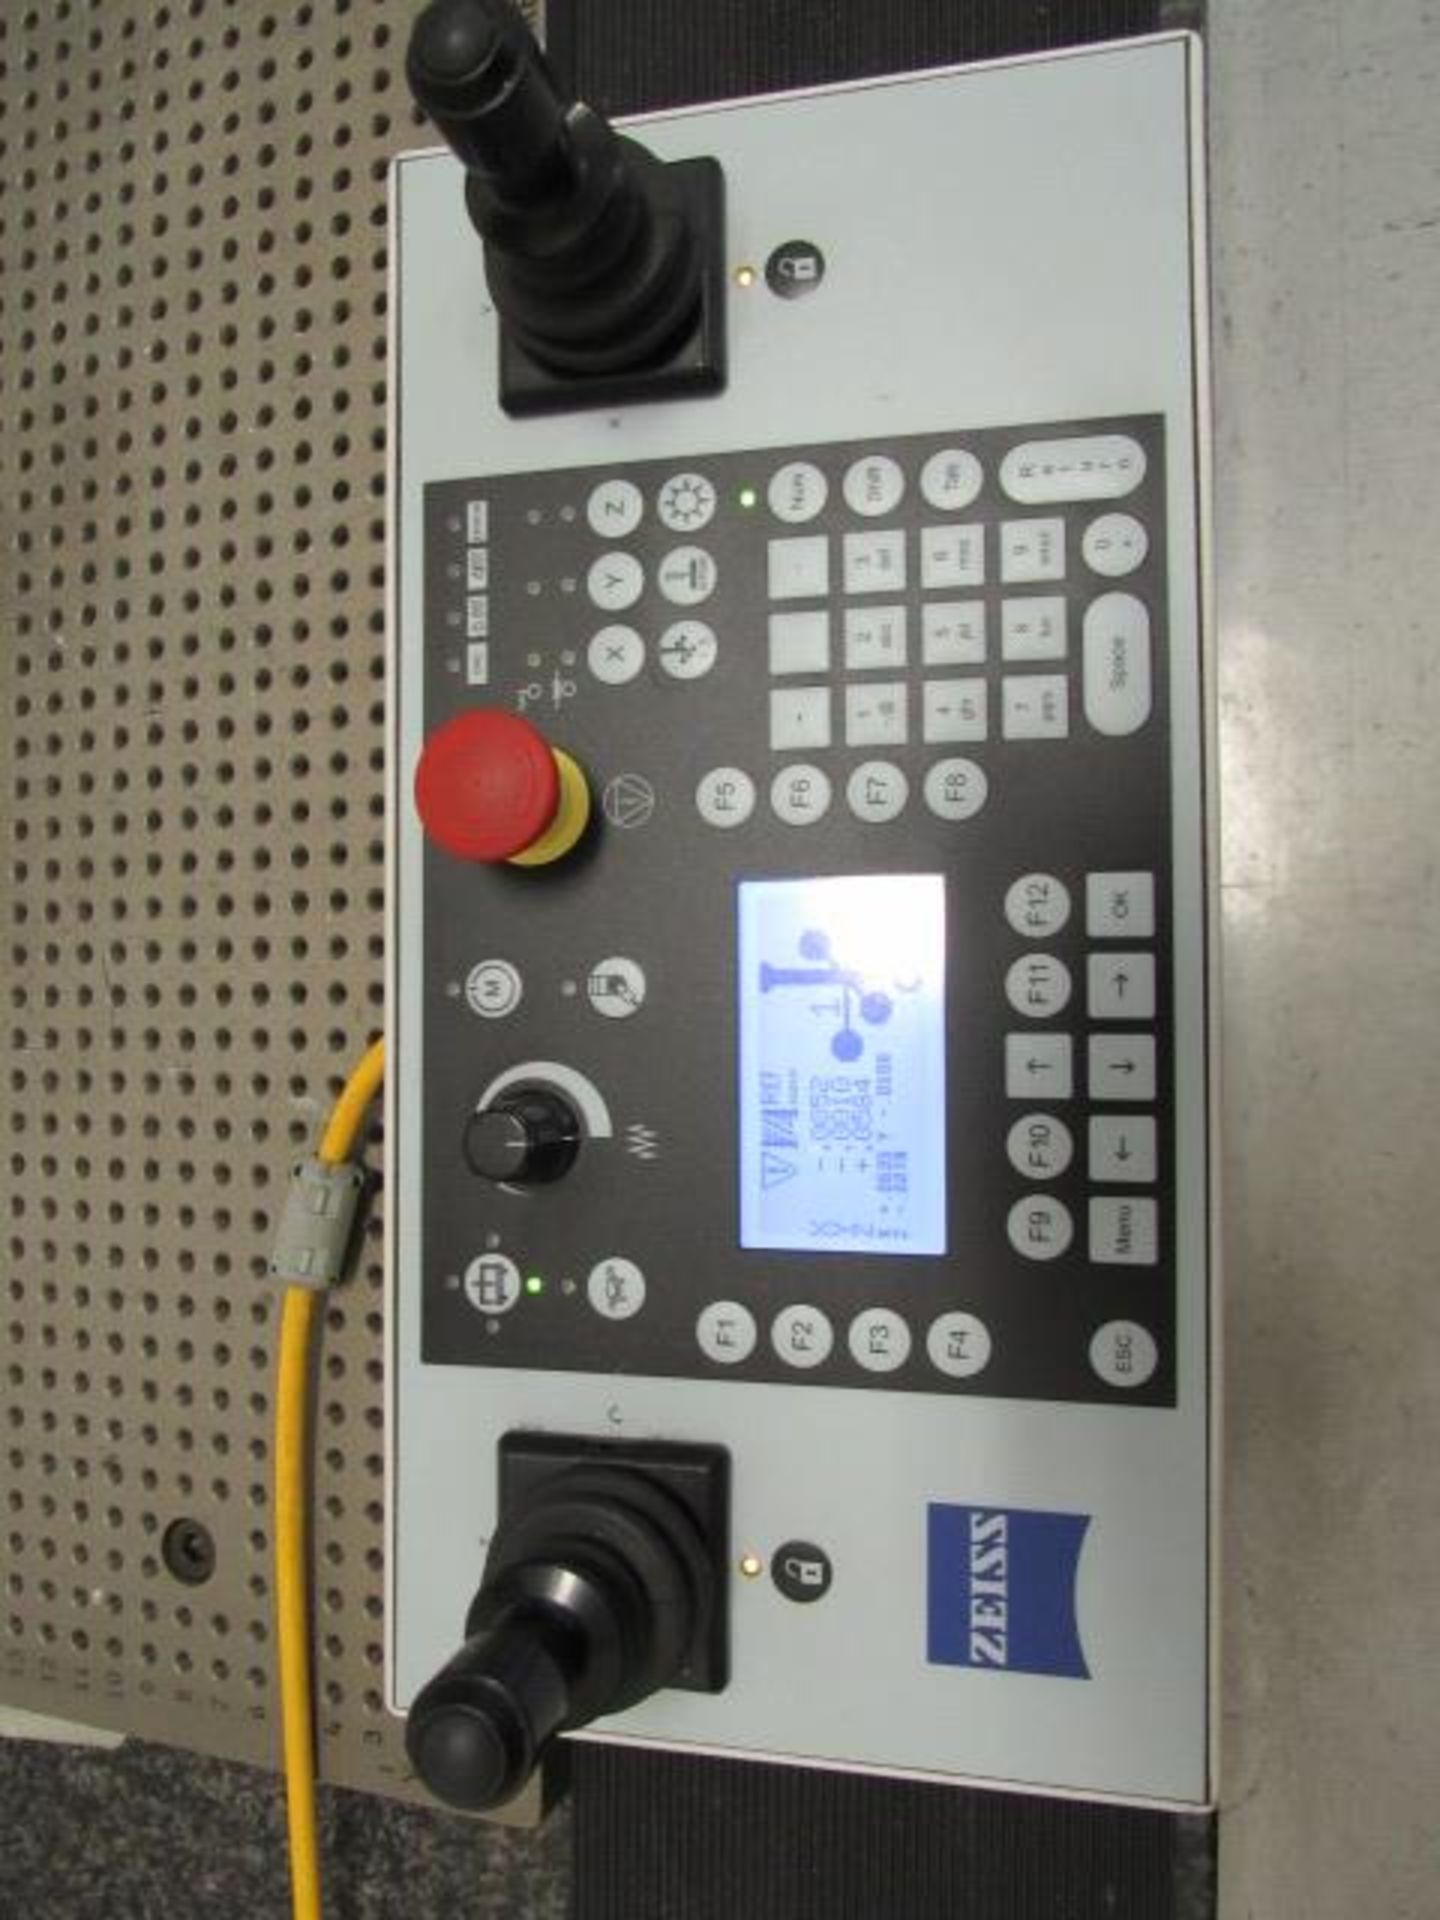 Zeiss Accura II CNC Coordinate Measuring Machine - Image 3 of 7